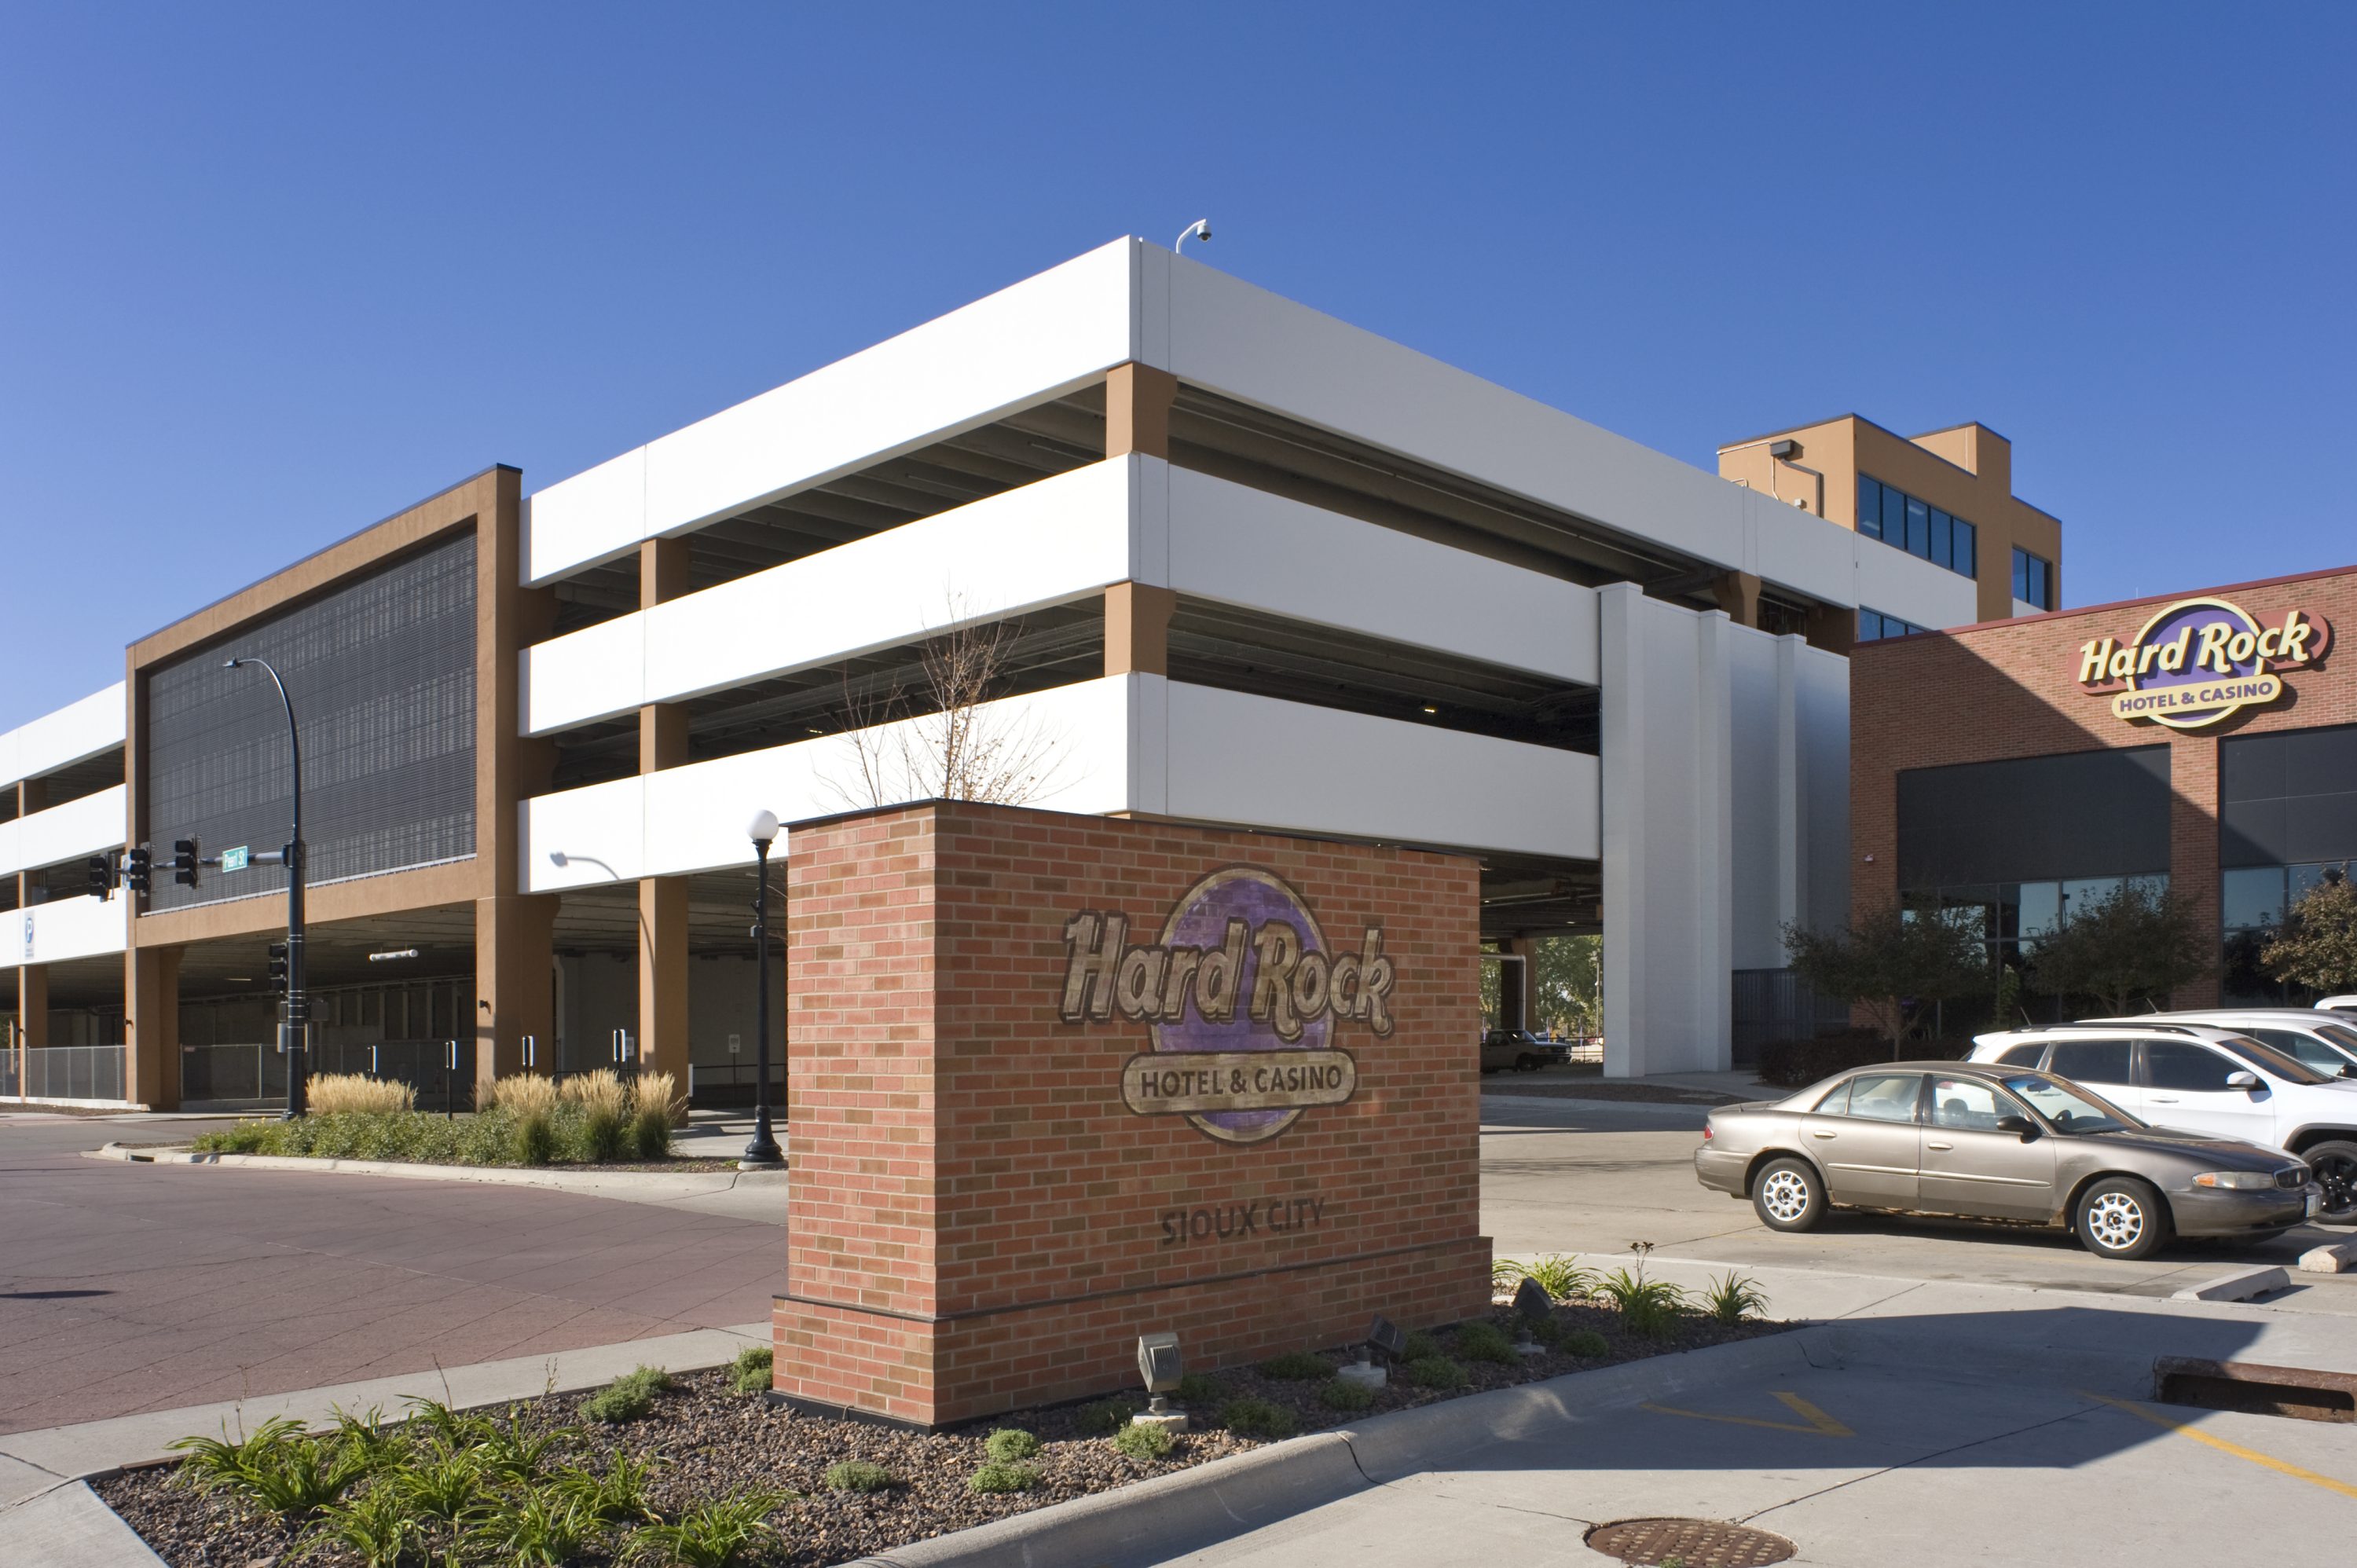 Hard Rock Casino Parking Ramp, Sioux City, Ia